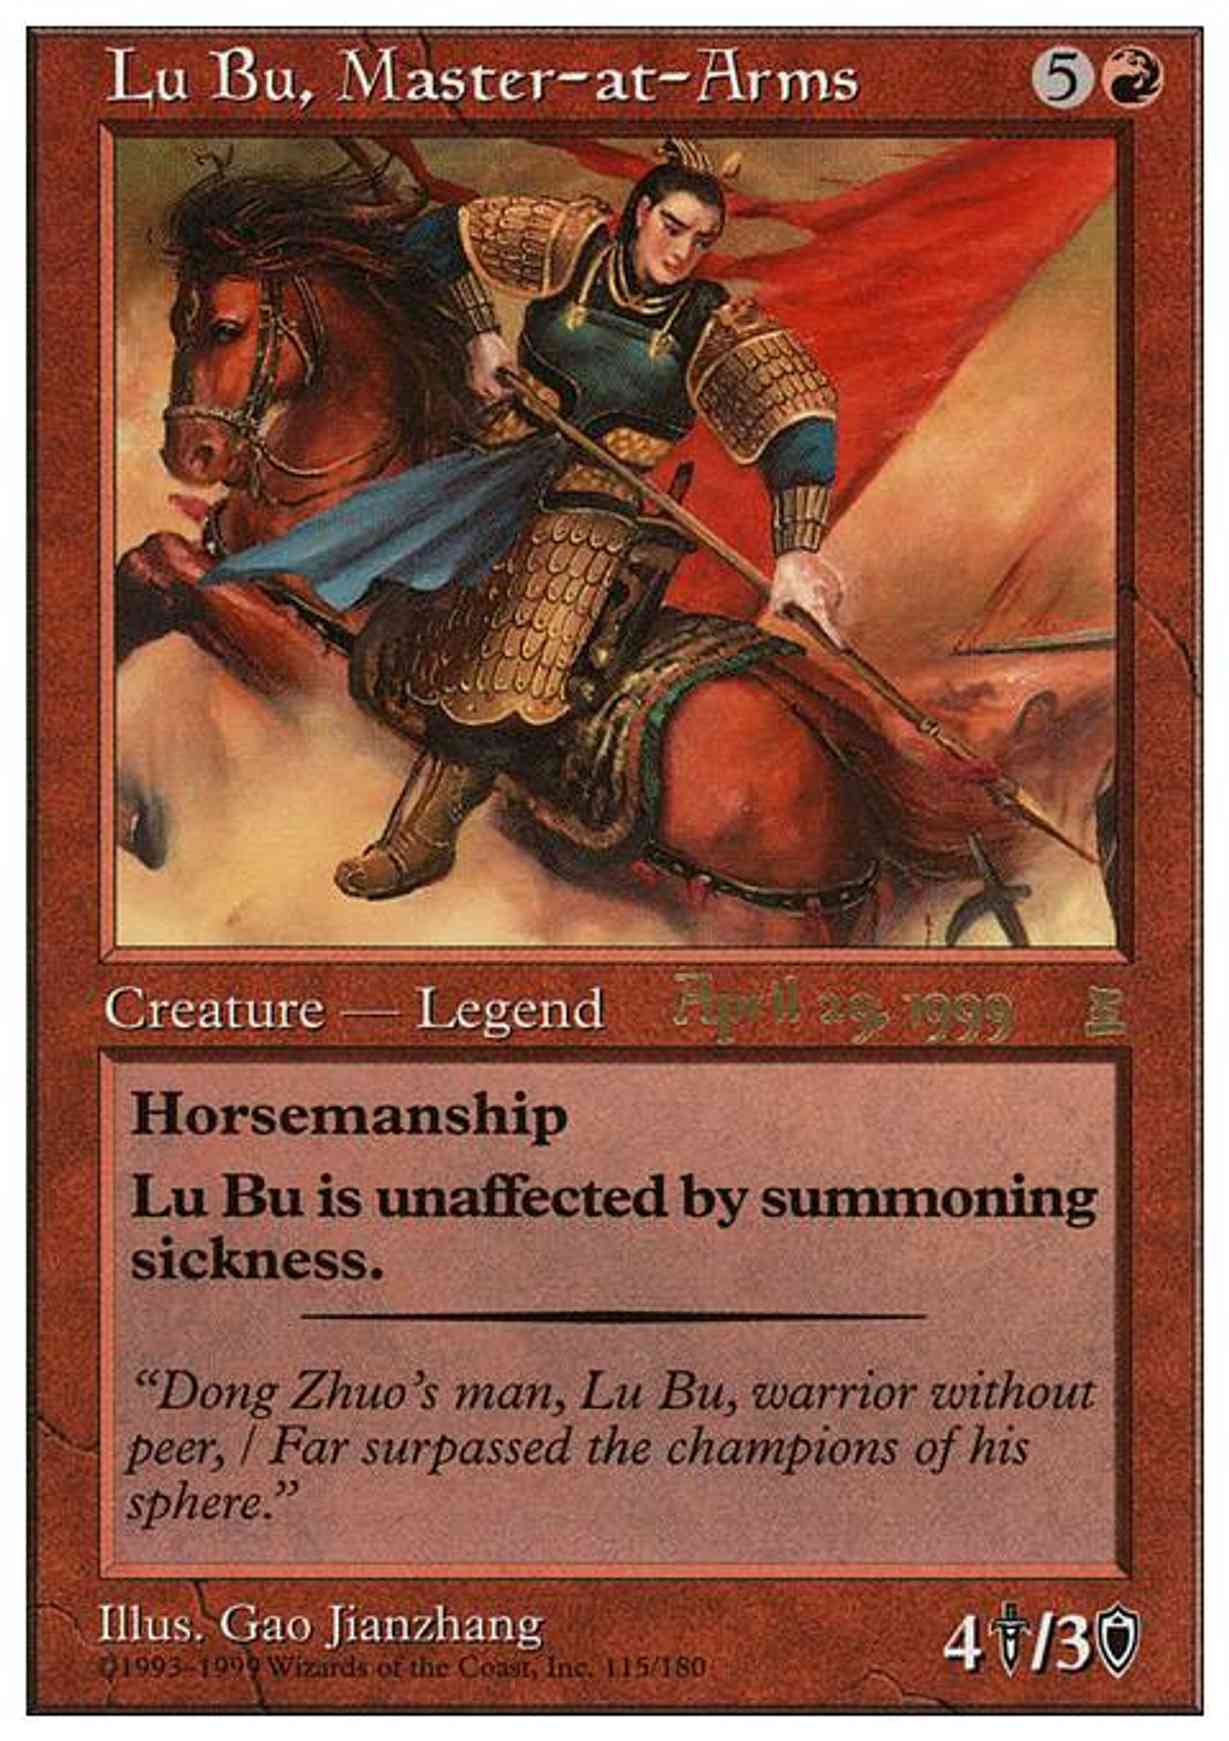 Lu Bu, Master-at-Arms (Japan 4/29/99) magic card front